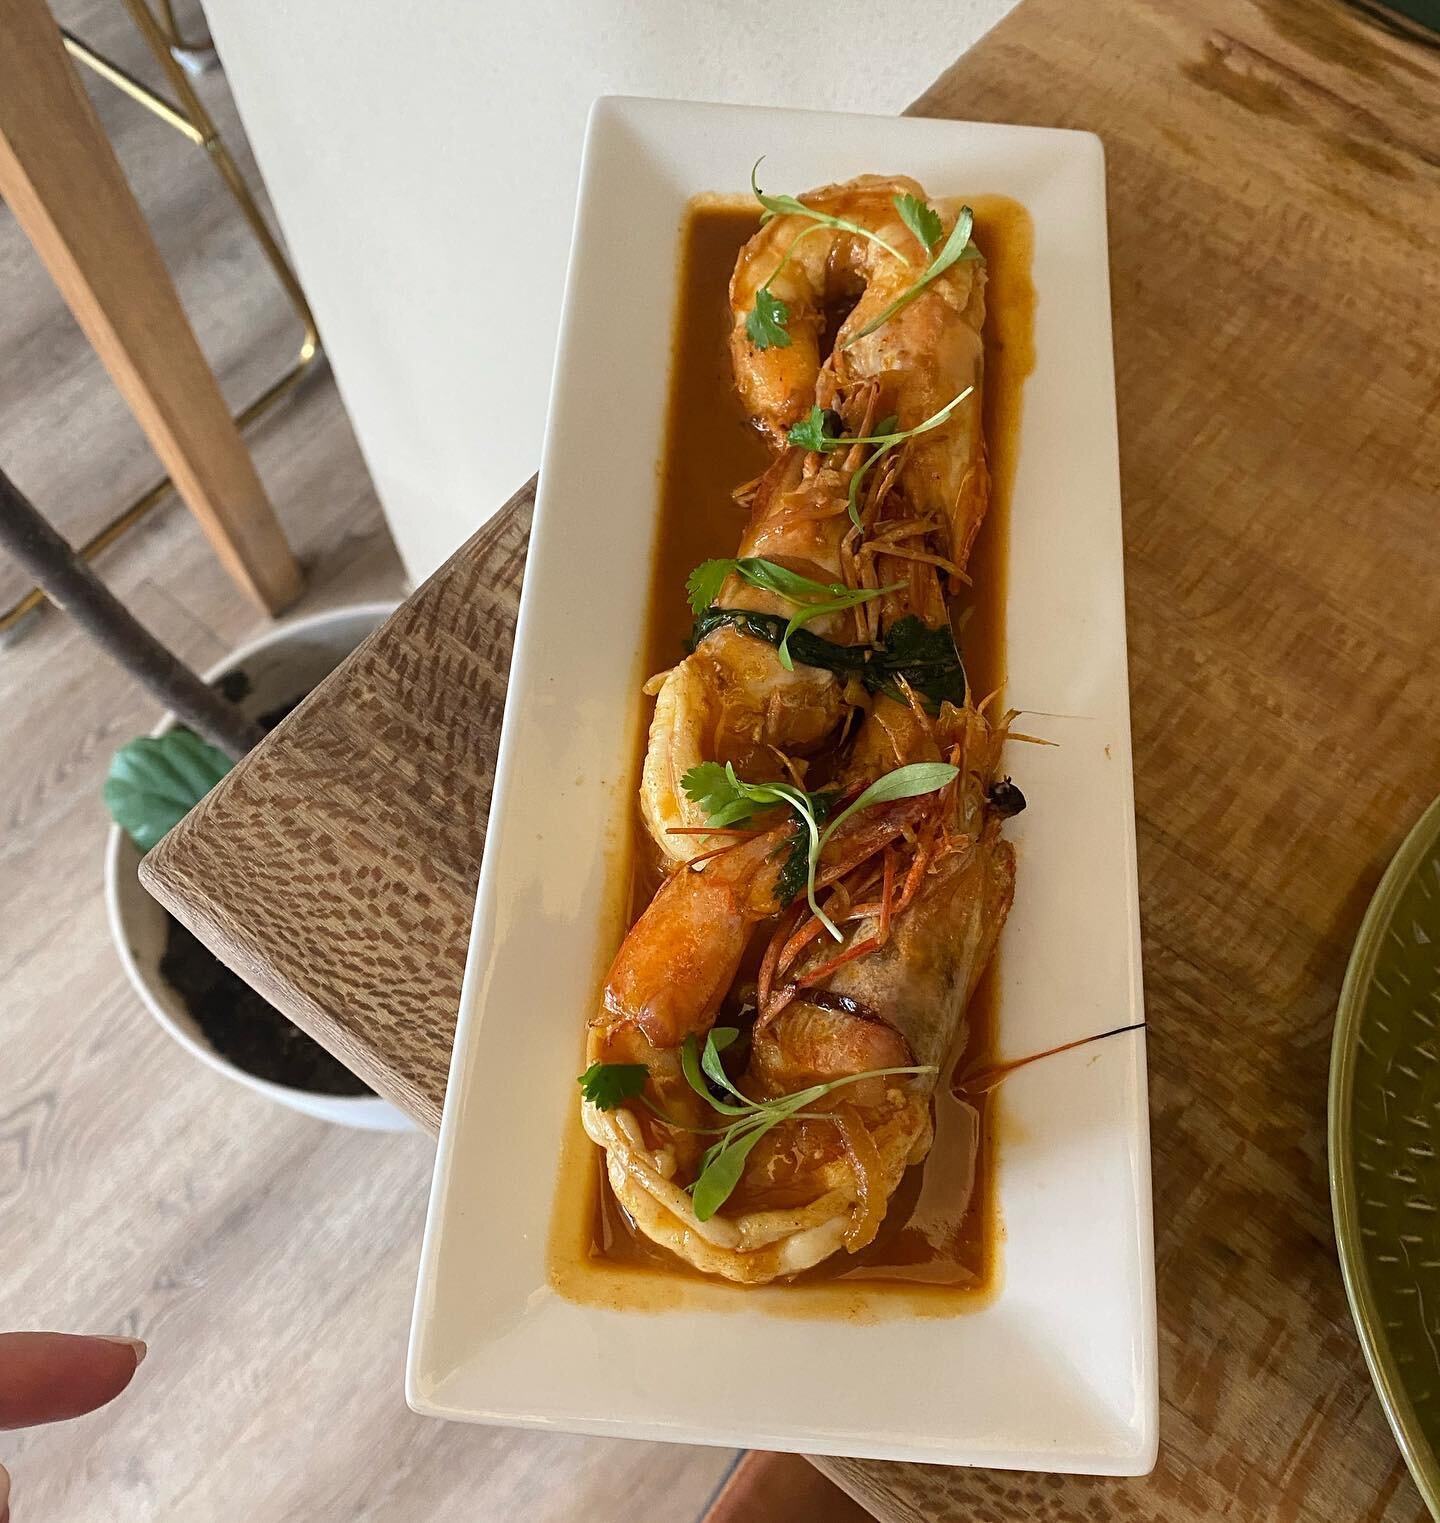 Shrimp Al Ajillo 🦐
Saut&eacute;ed head on jumpo shrimp, white wine, garlic and paprika 
.
.
.
. 
.
#mesorestaurant 
#rye #westchester 
#meditteraneanfood 
#shrimpalajillo #shrimp